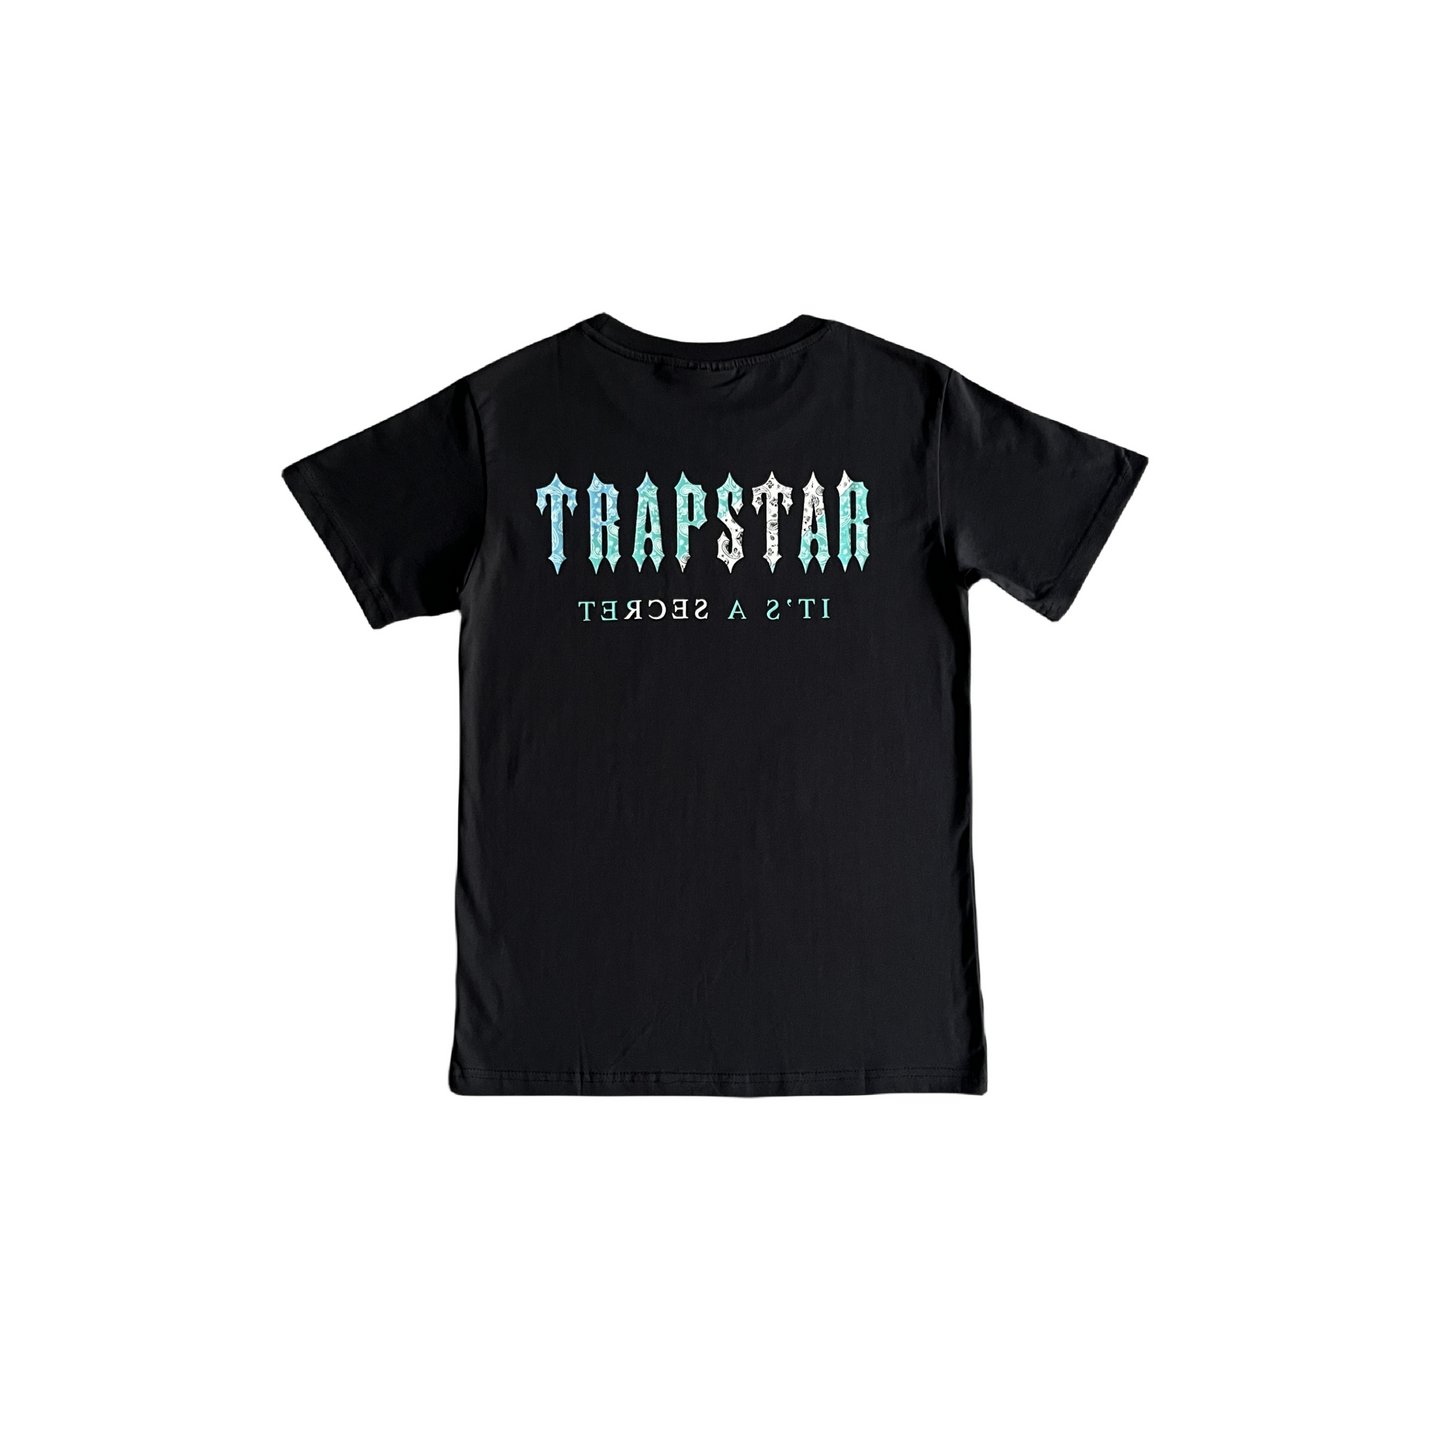 Trapstar Irongate Palsey Tee T-shirt - Black Teal /White Teal